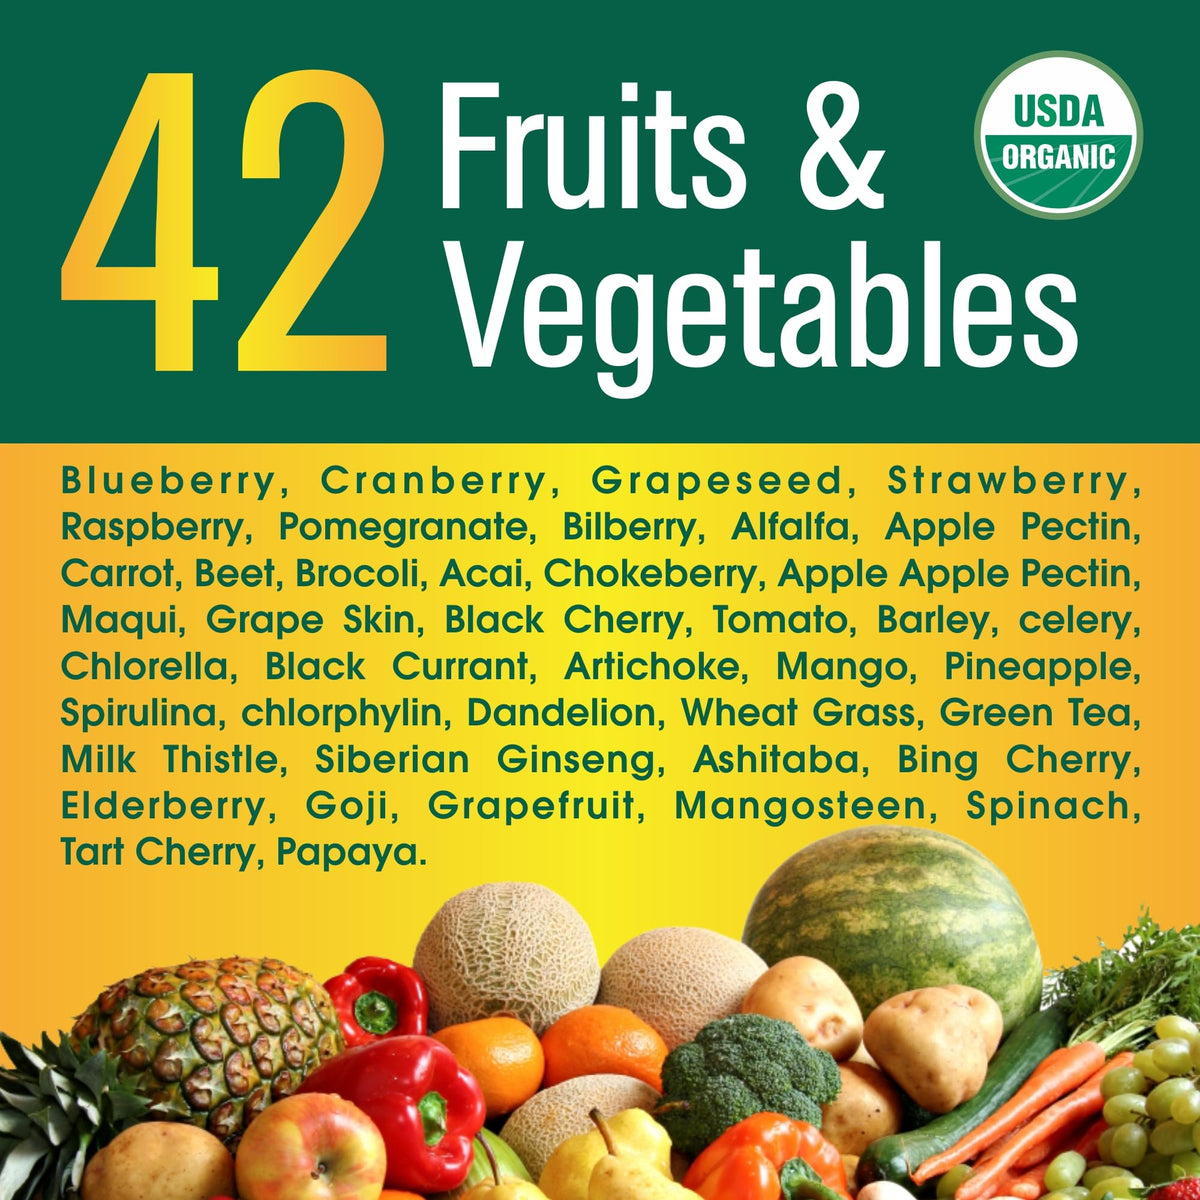 42 Superfood Blend Capsules - 60 Capsules: Fruits &amp; Vegetables Capsules